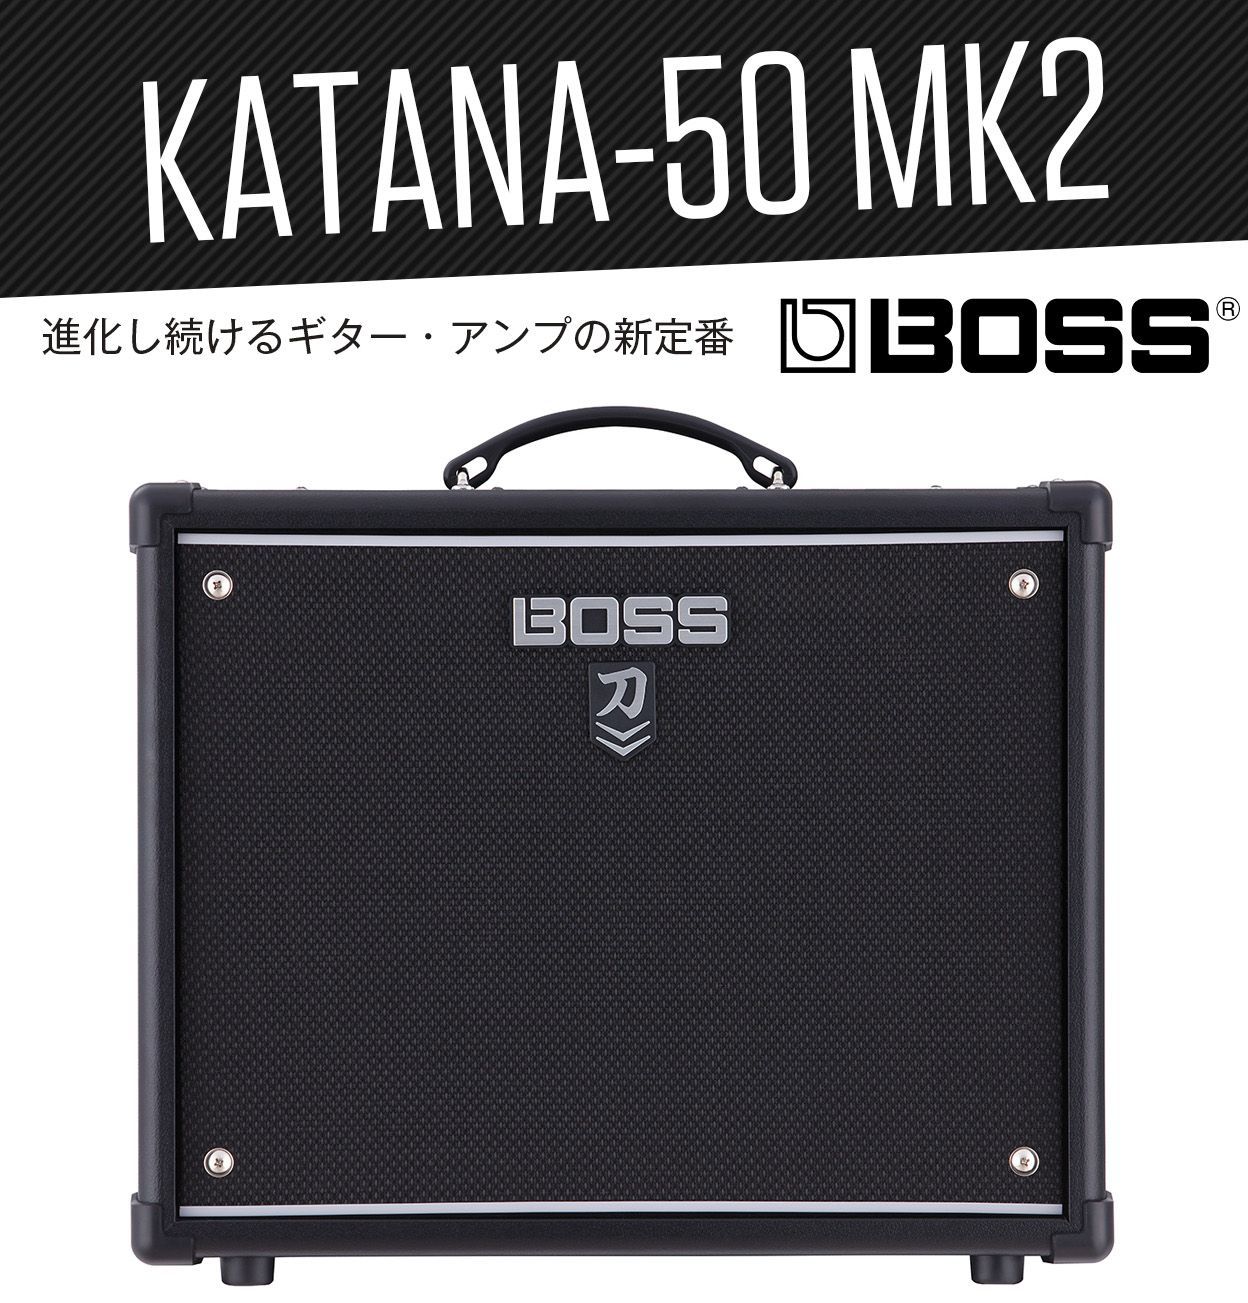 BOSS KATANA-50 MK2 ギターアンプ KTN-50 MK-II(刀シリーズ)ボス(YRK